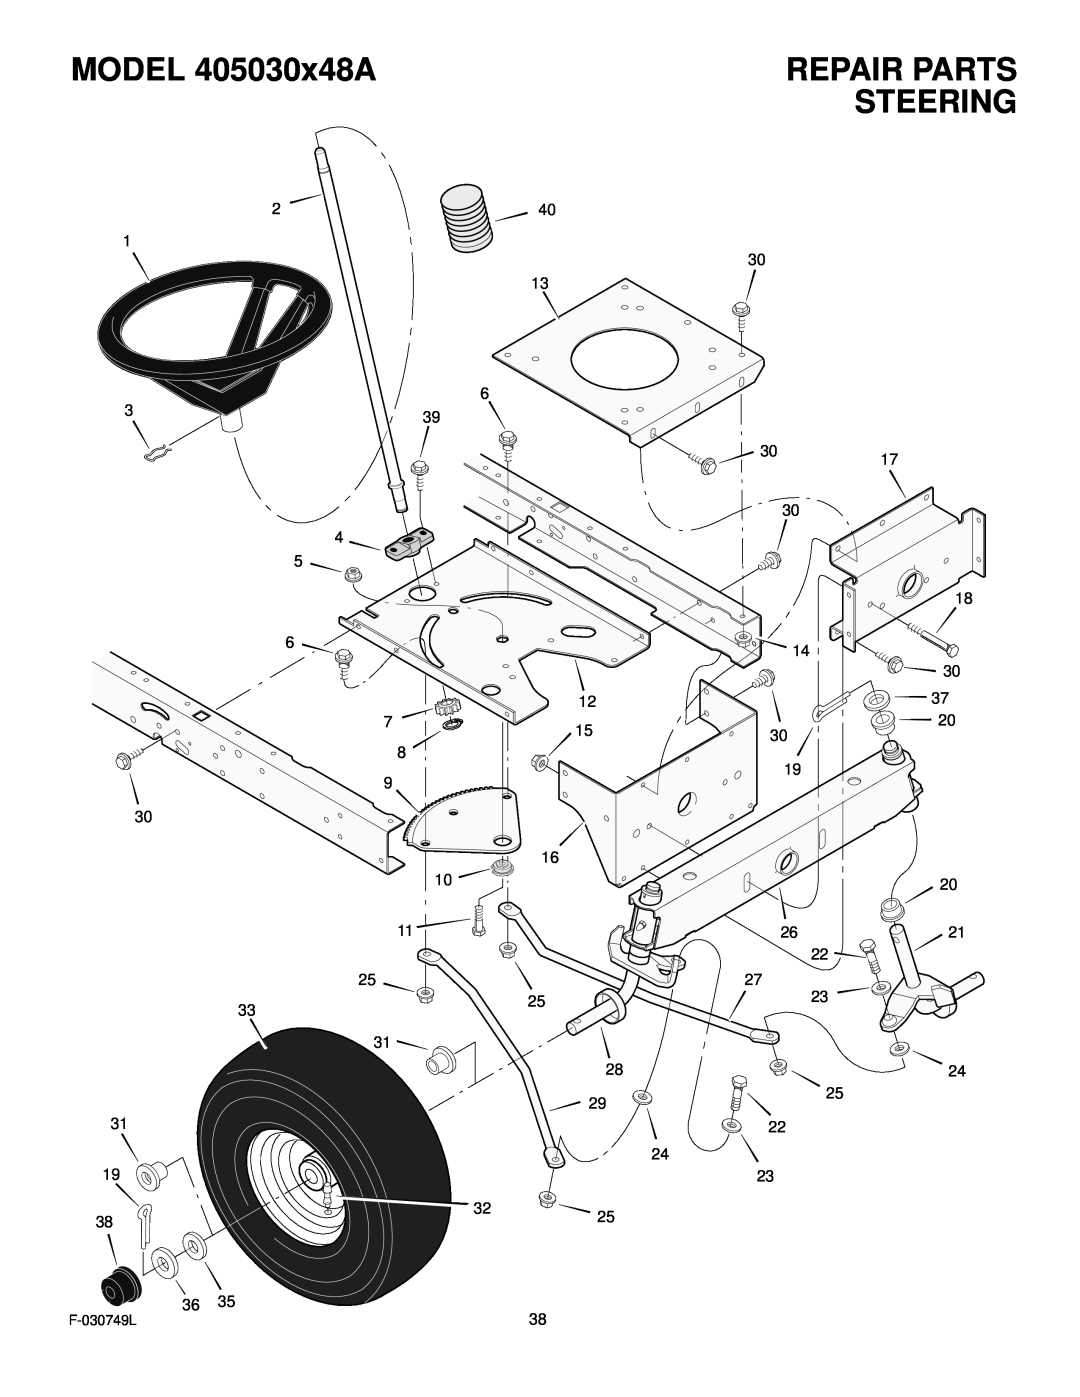 Murray manual Steering, MODEL 405030x48A, Repair Parts 